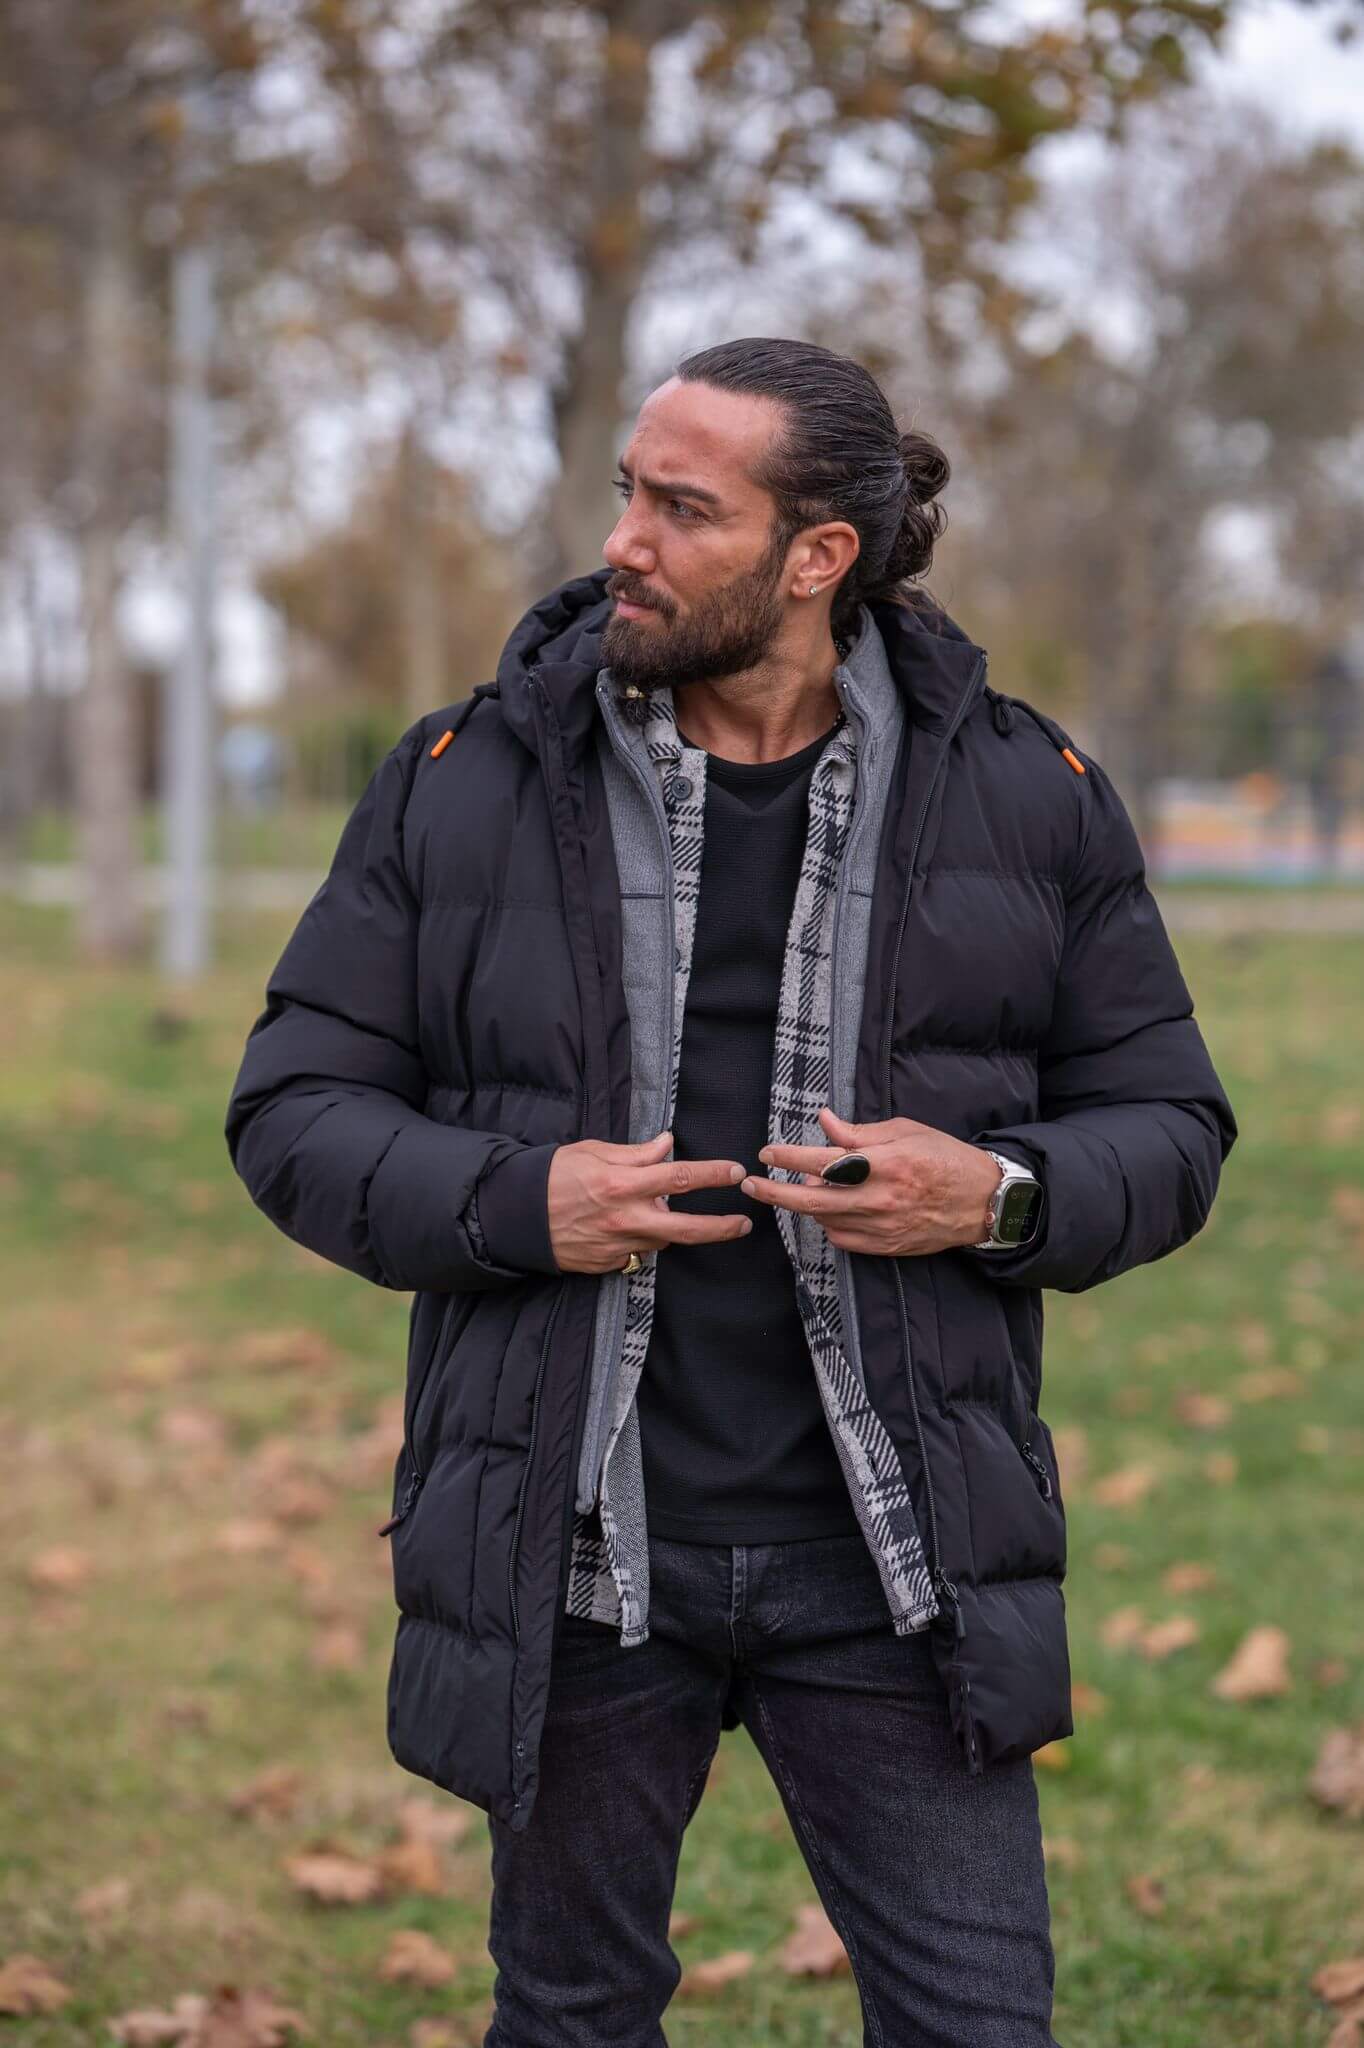 Striking male model confidently displays the sleek and stylish black puffer jacket.